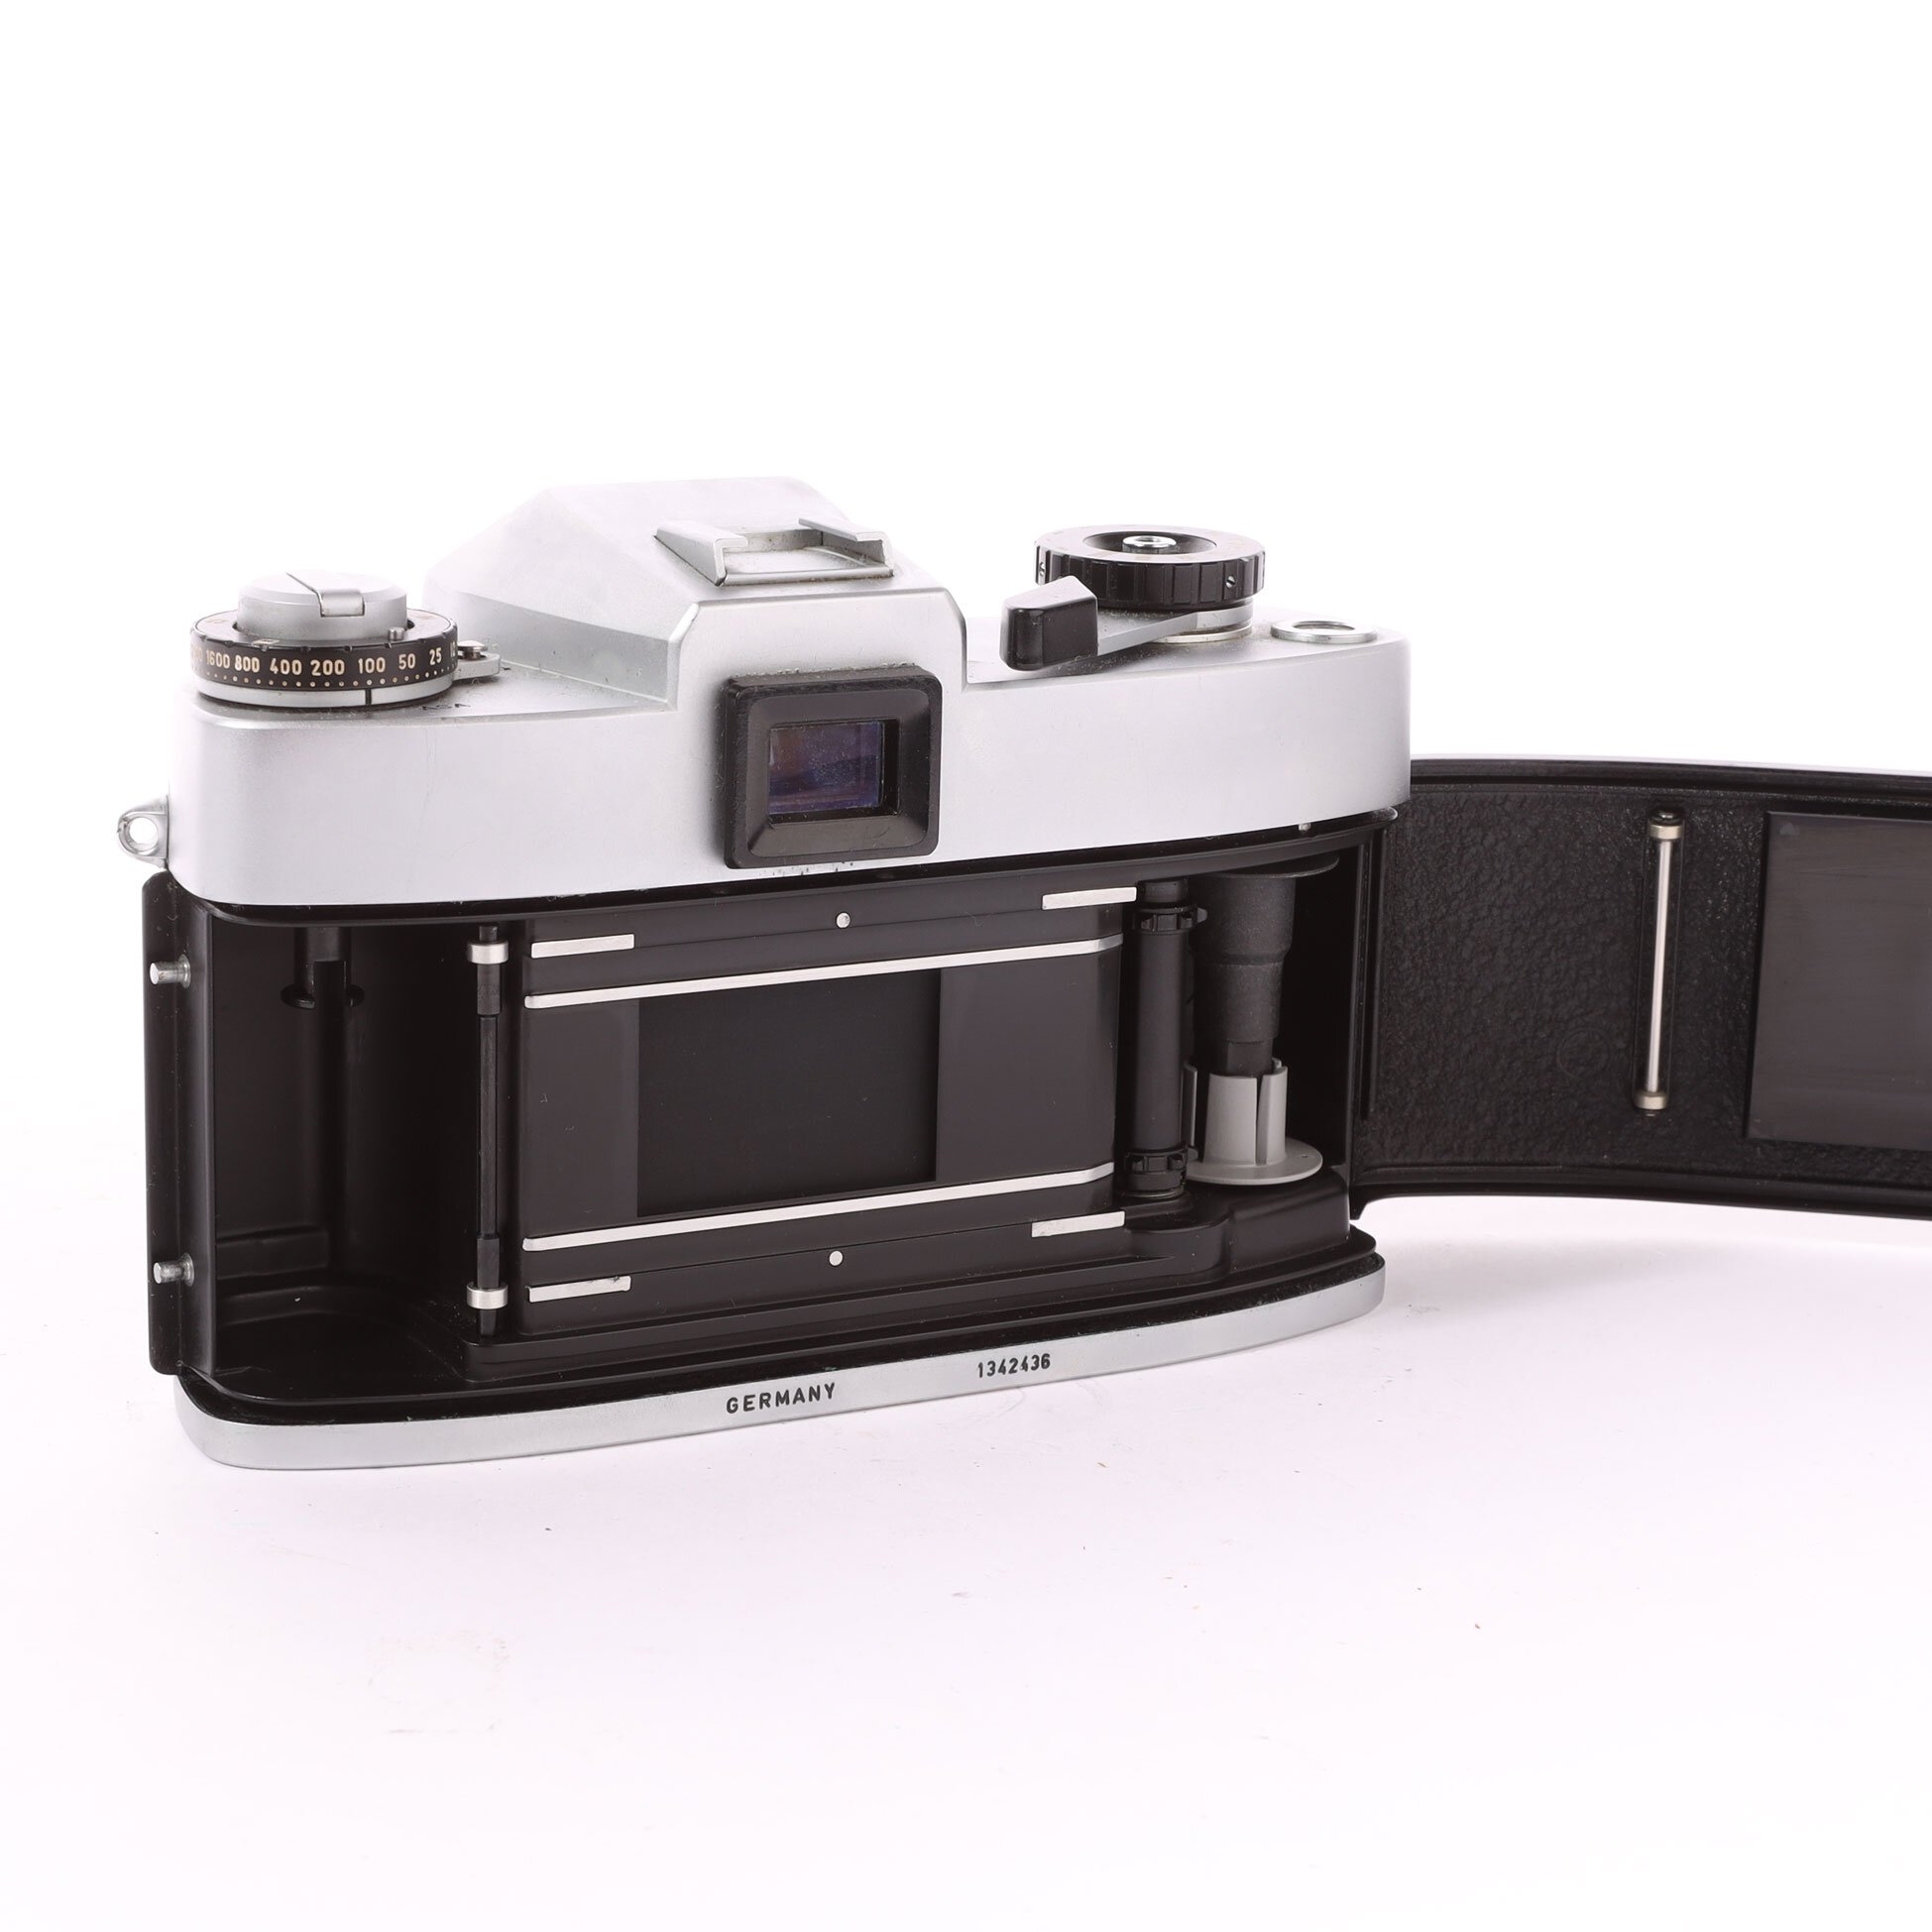 Leica Leicaflex SL Chrom